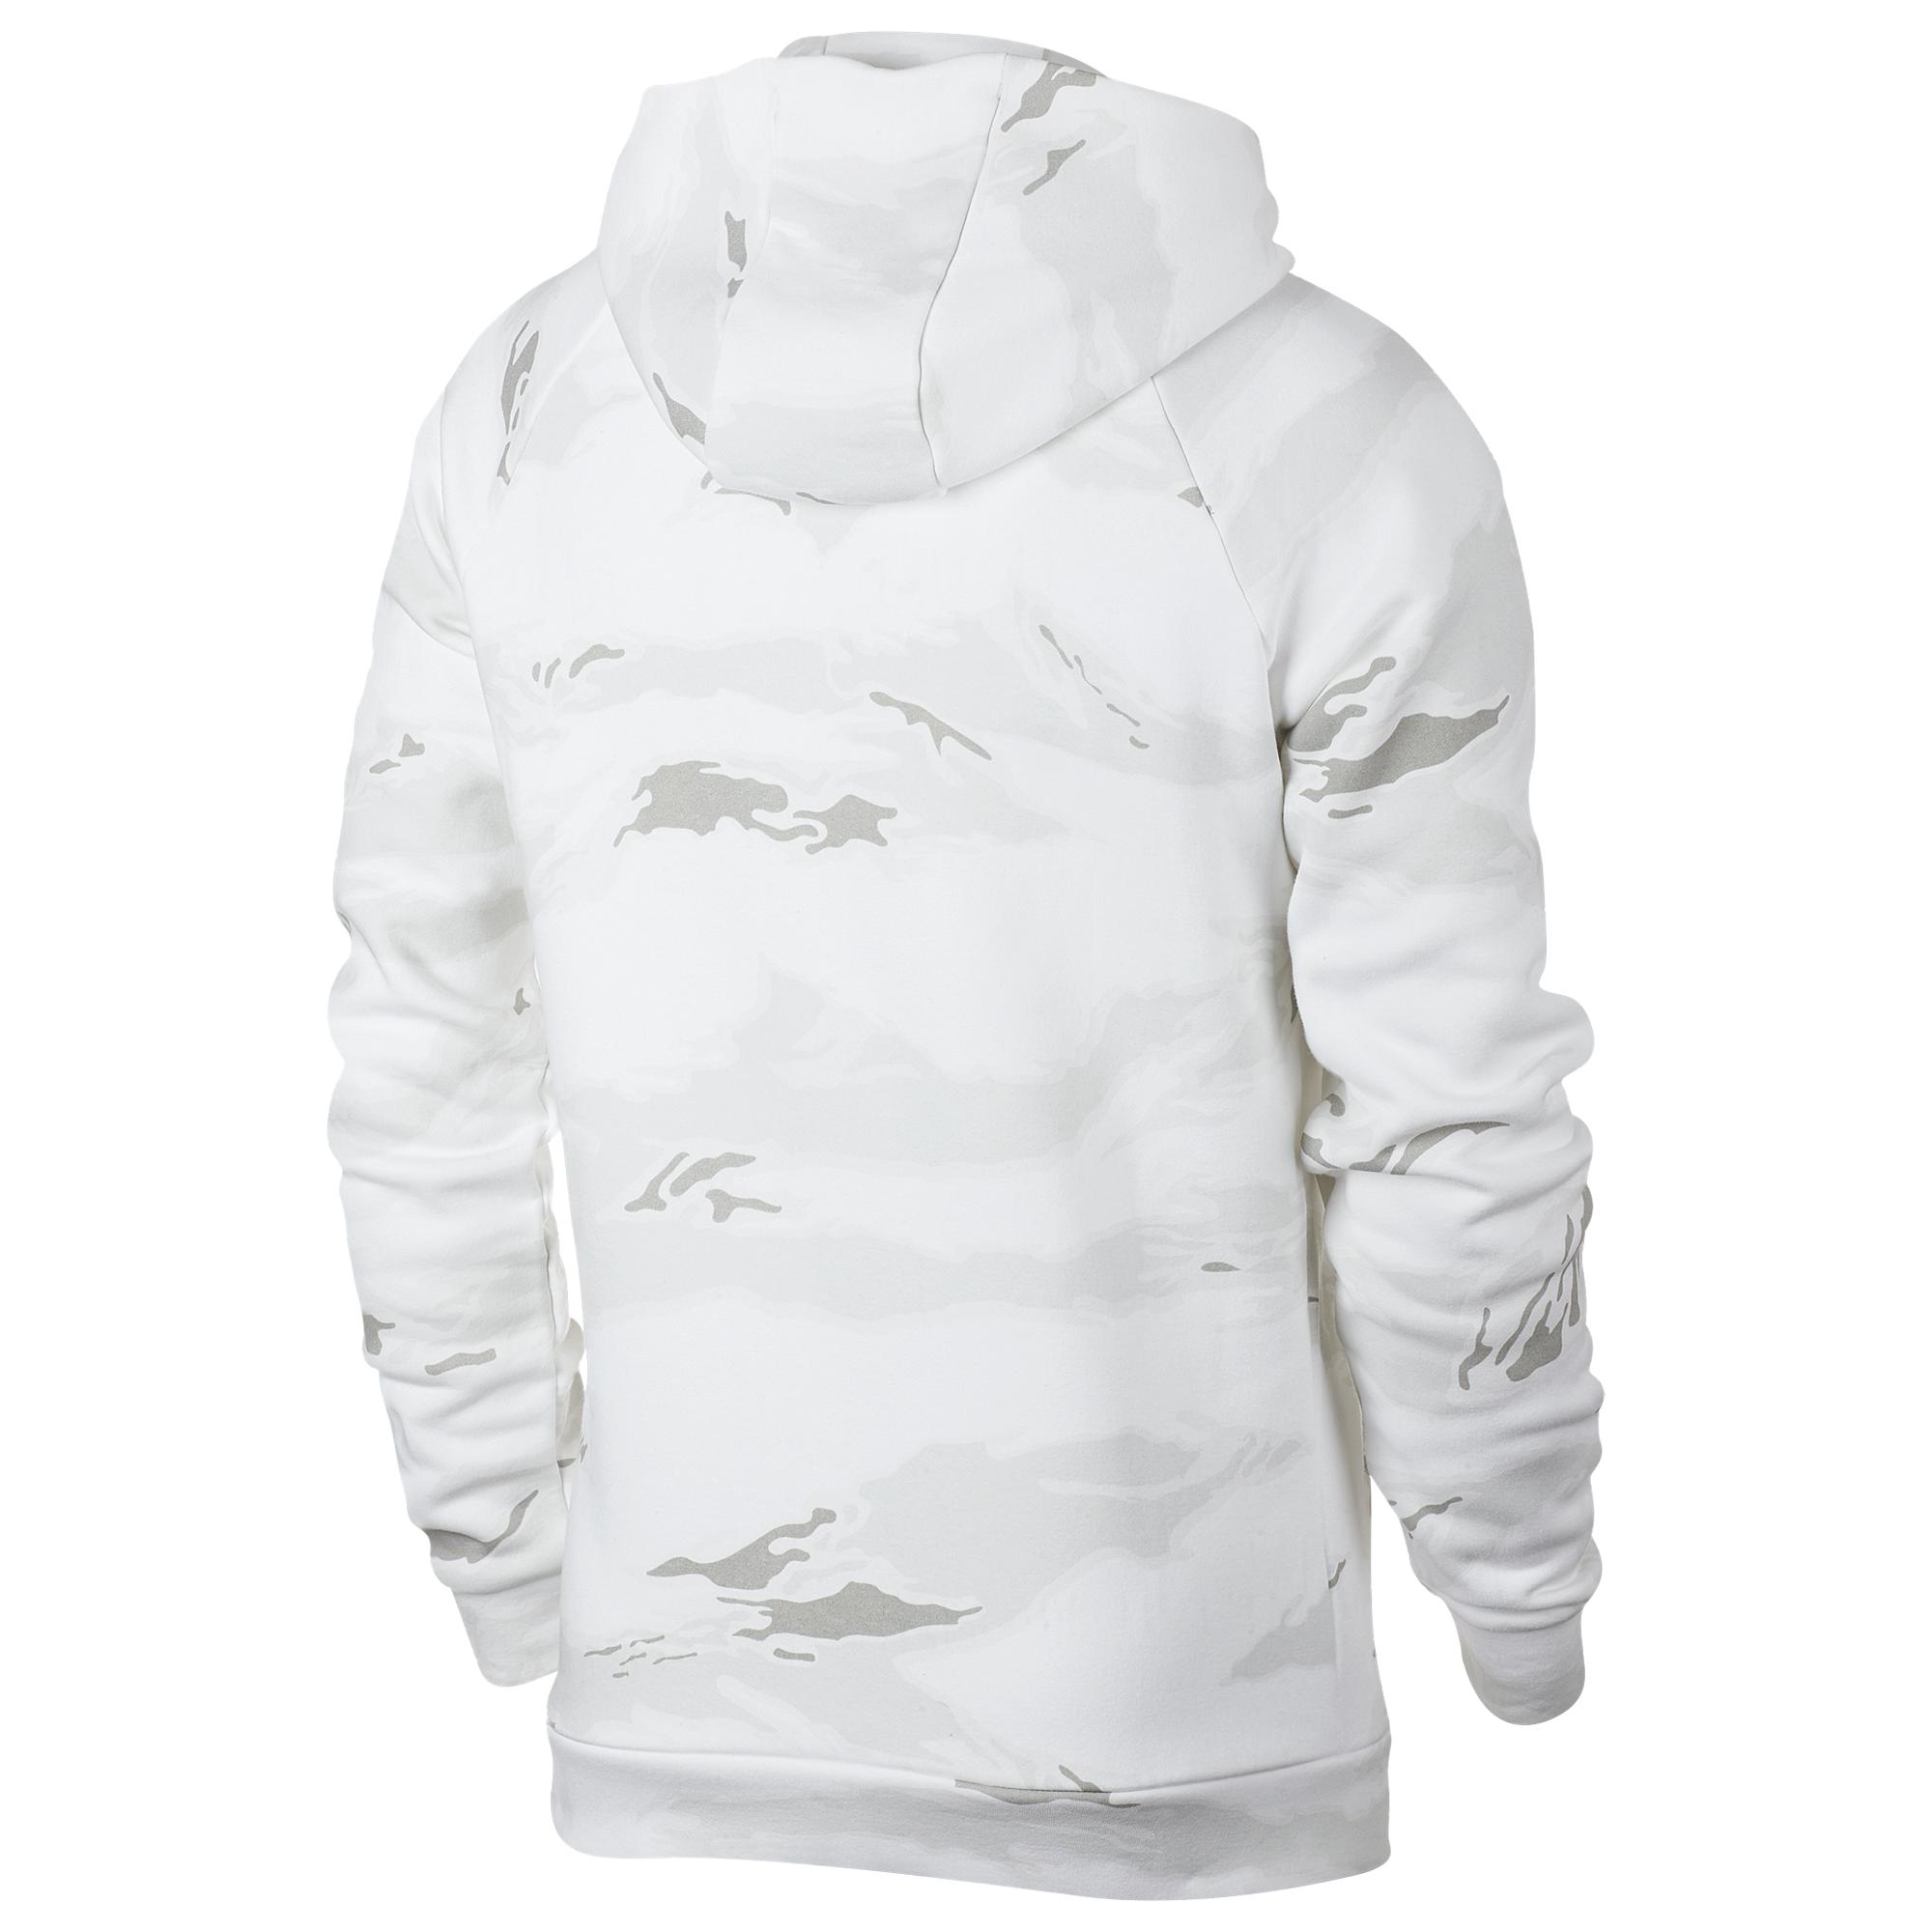 Nike Jumpman Air Fleece Camo Hoodie in White/Black (White) for Men - Lyst